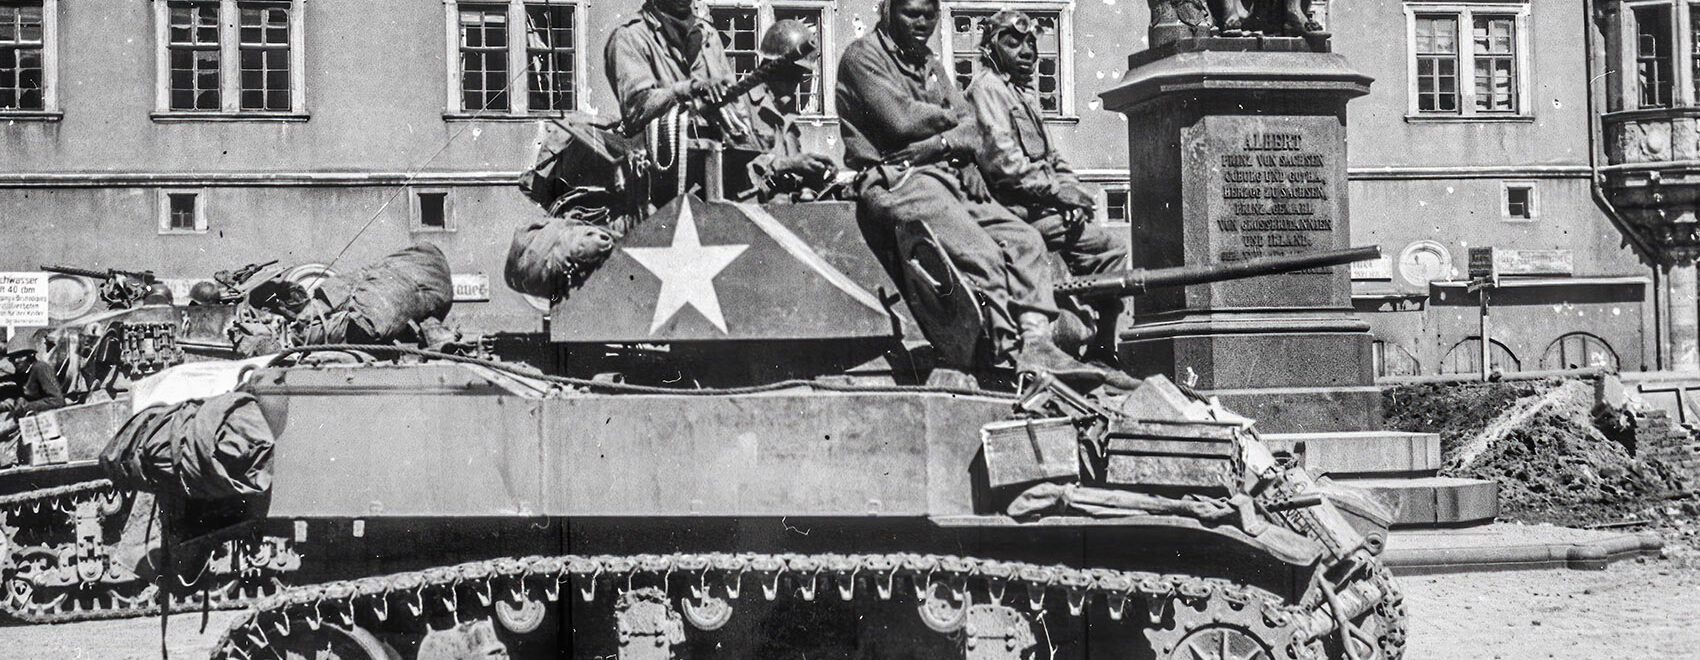 U S tank in Europe with 761st Tank Battalion in World War 2